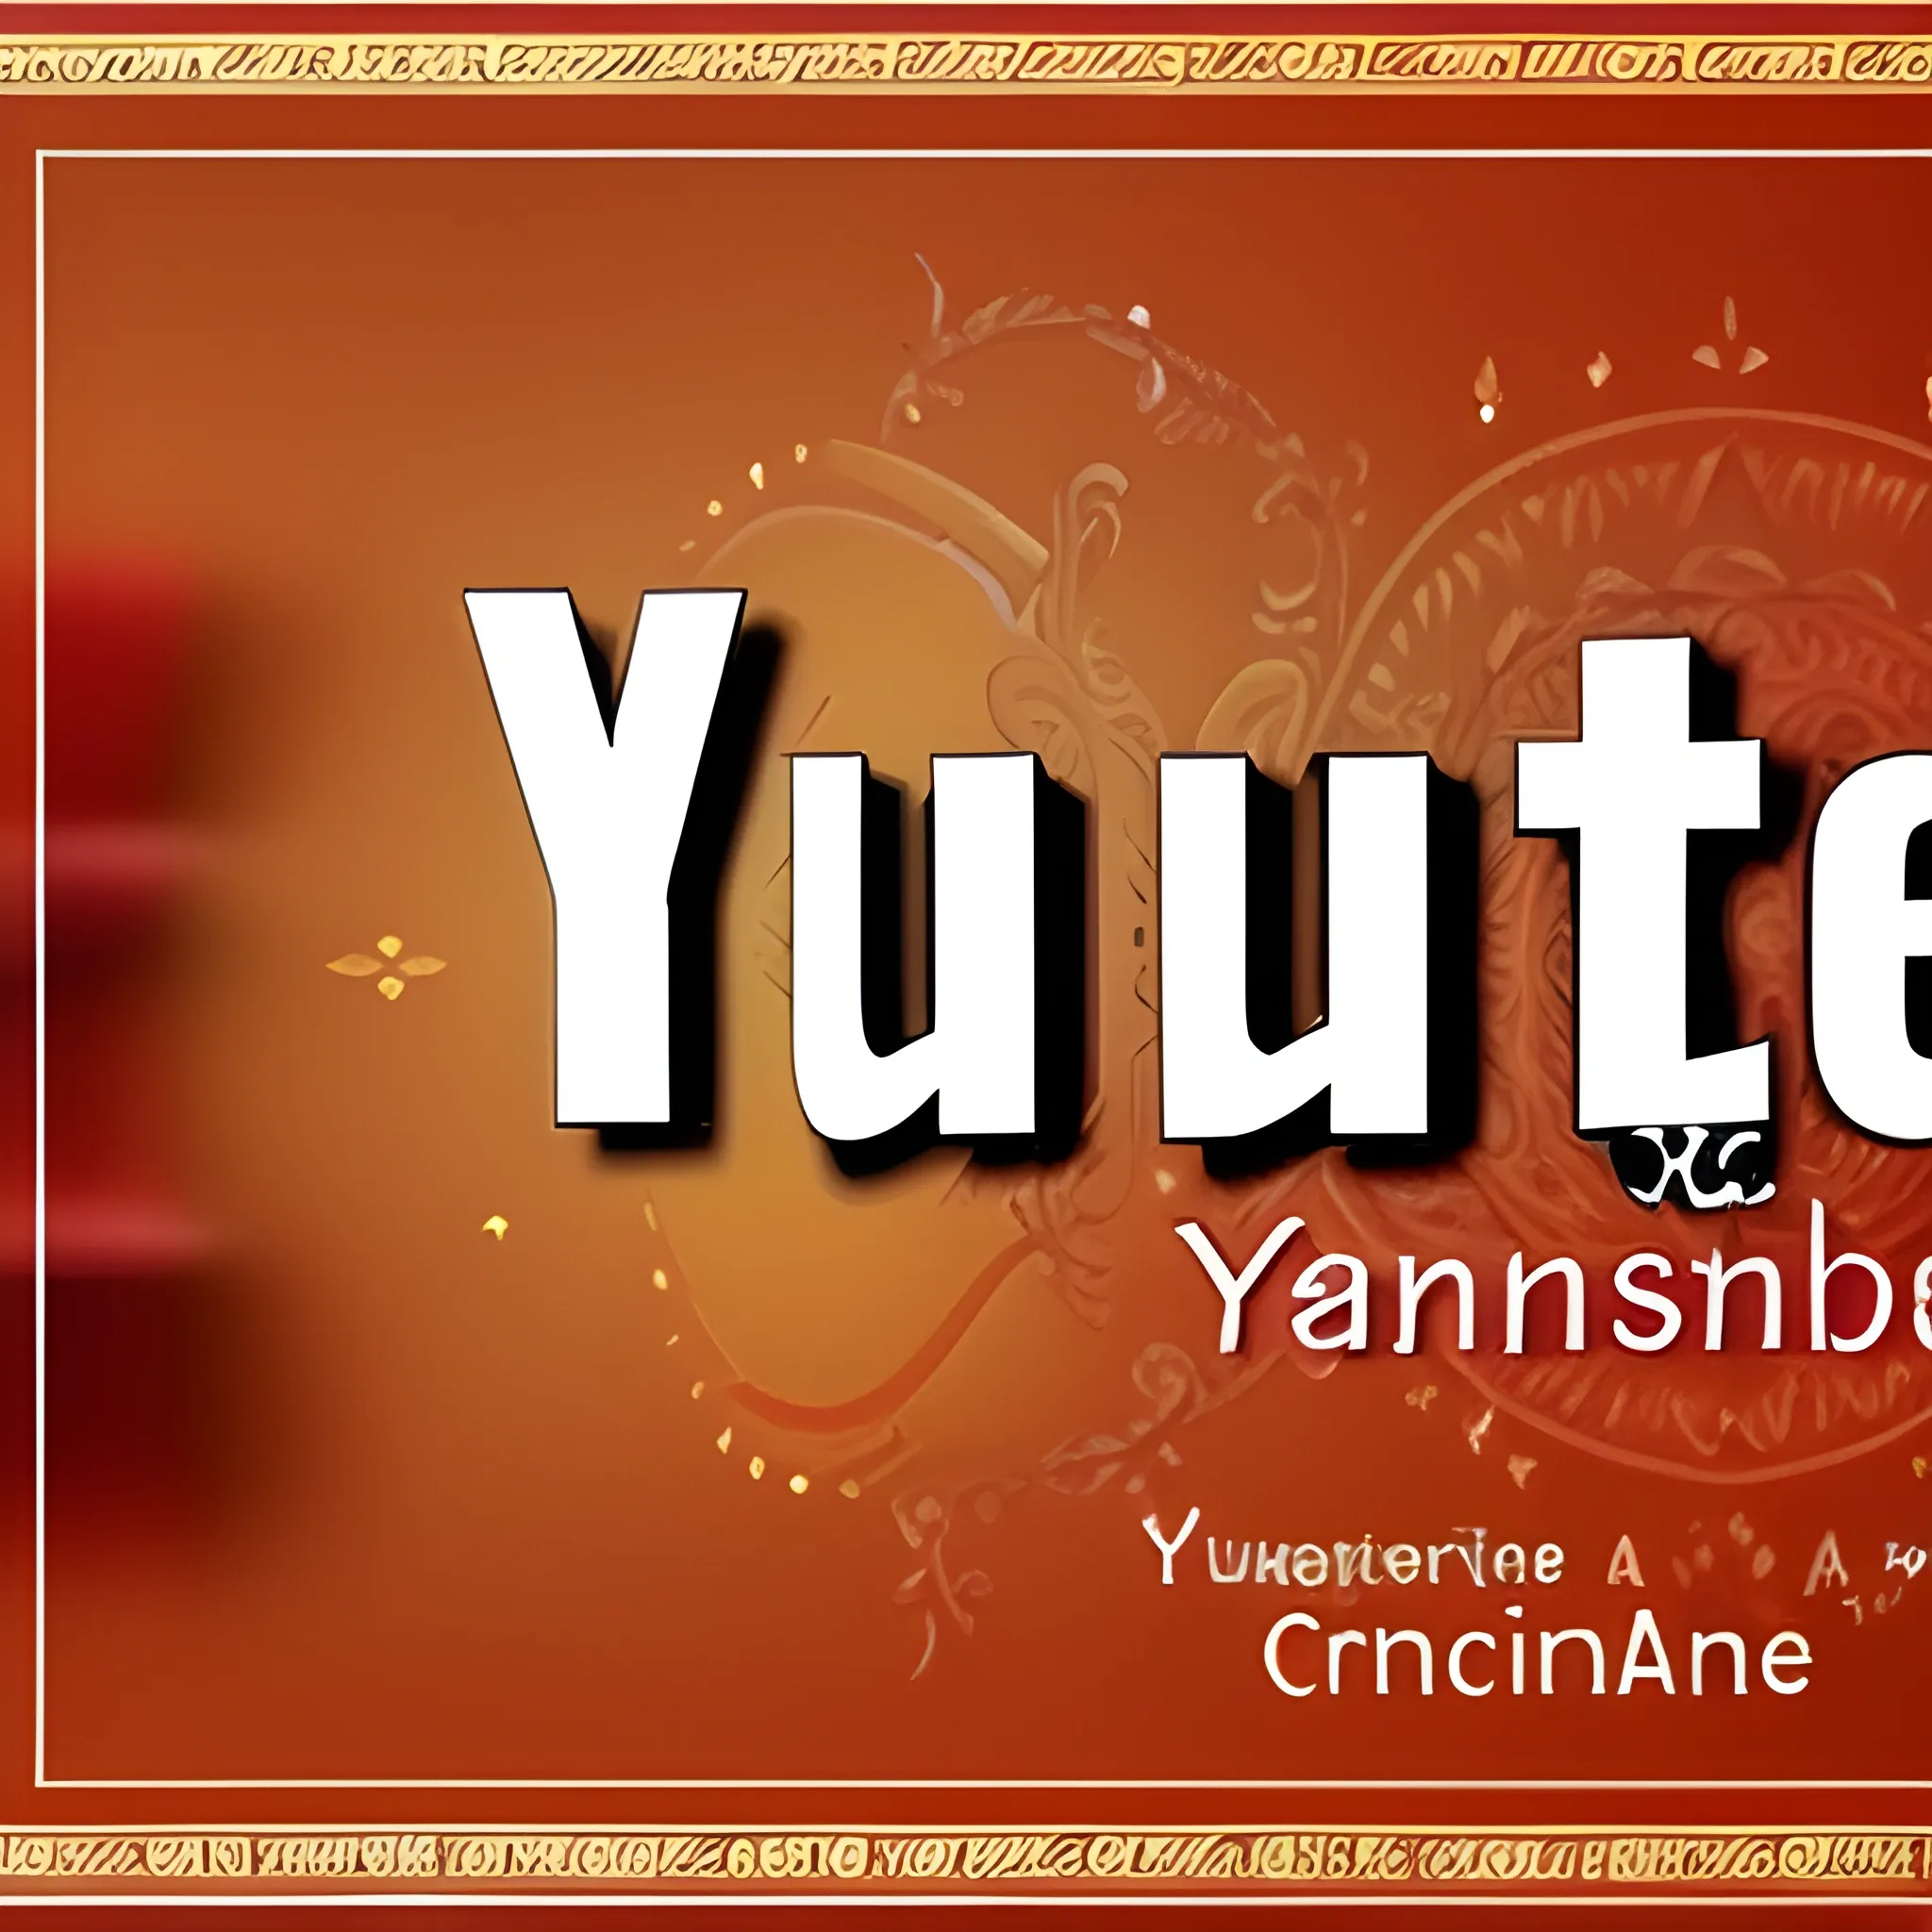 a youtube banner for Sanskrit language youtube channel